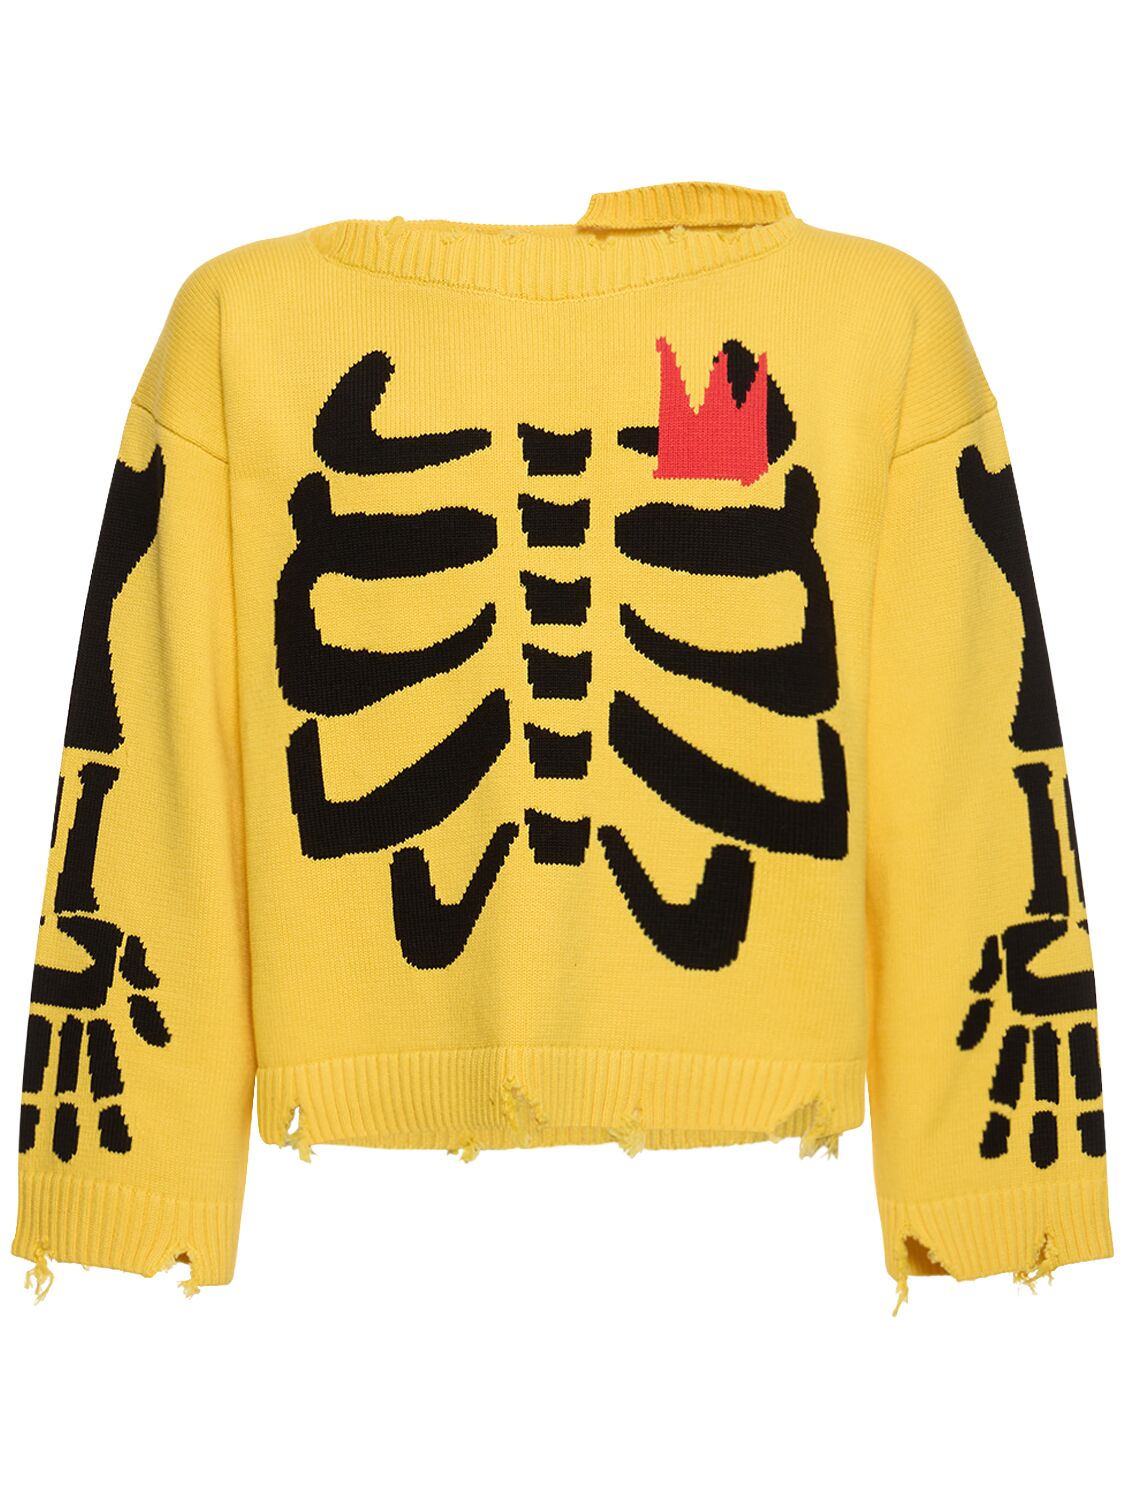 Graphic Slash Skeleton Sweater